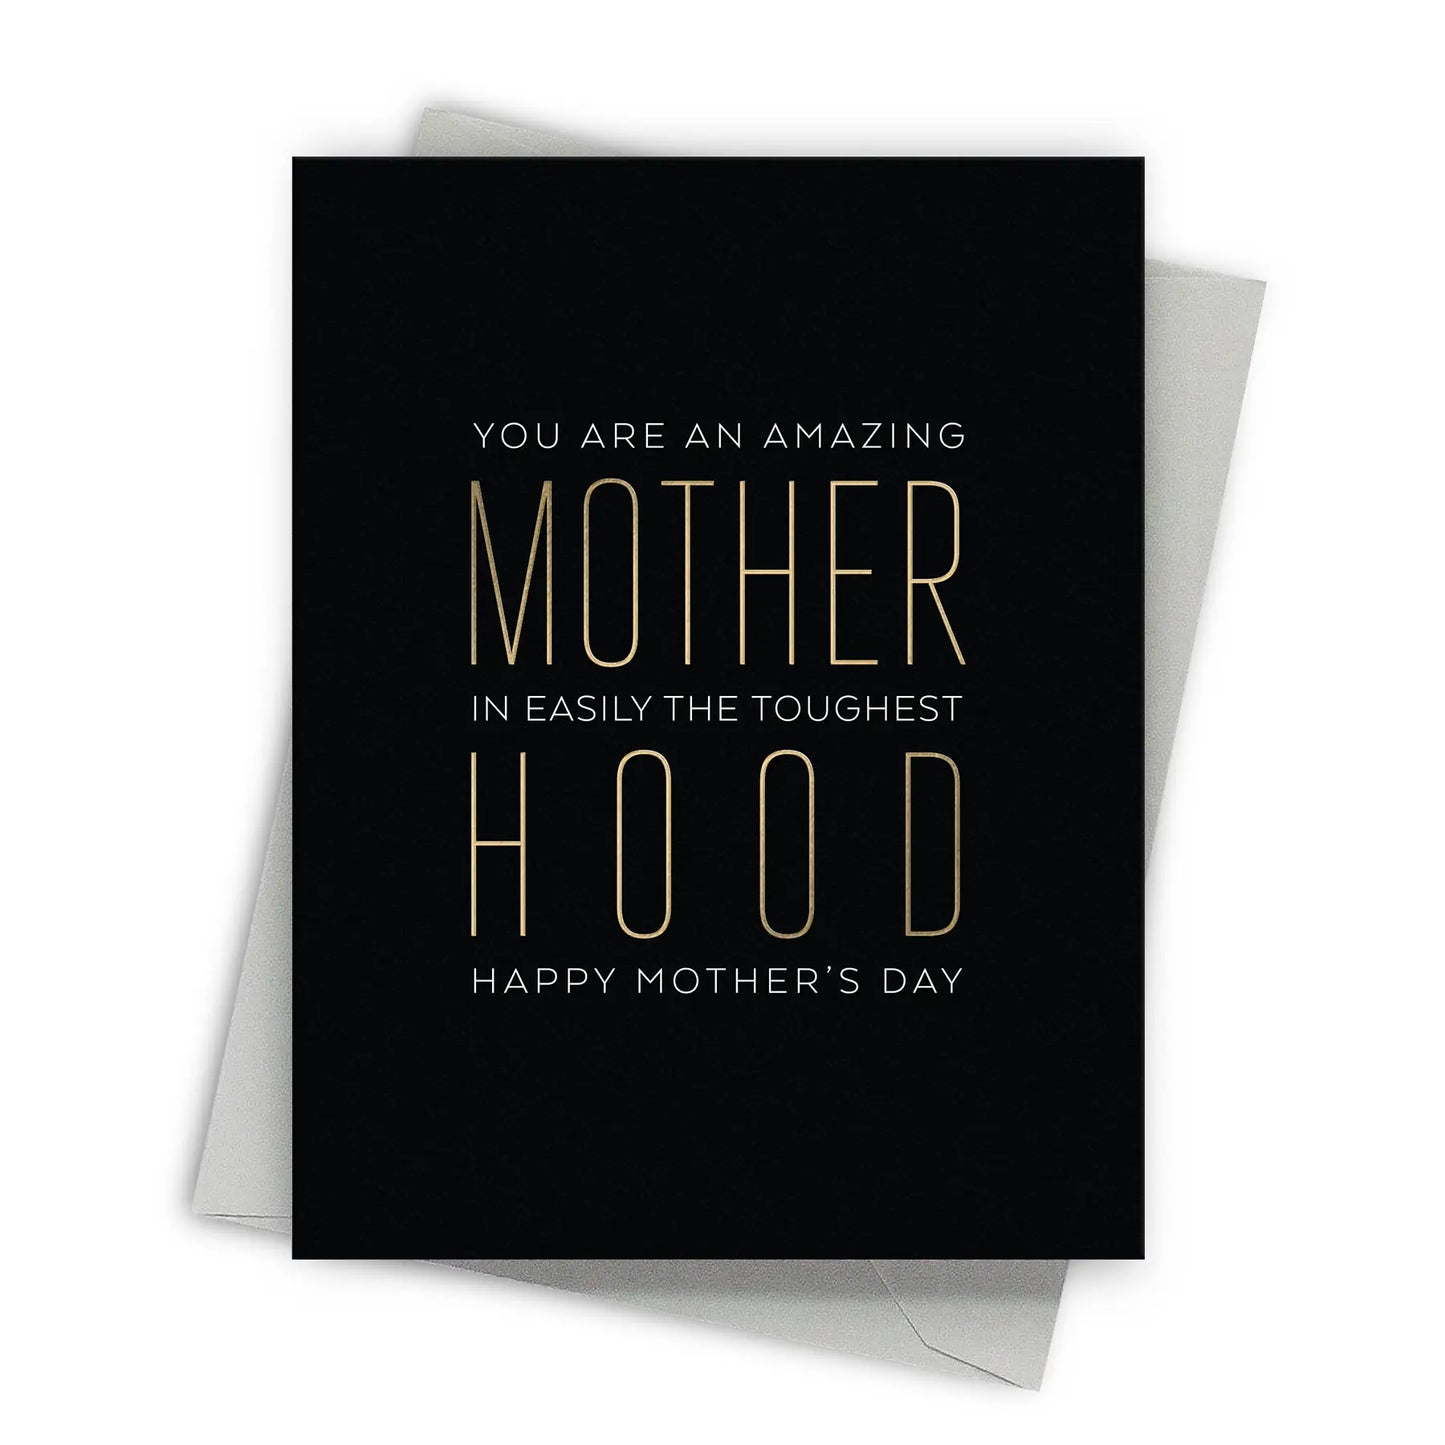 Mother Hood Card